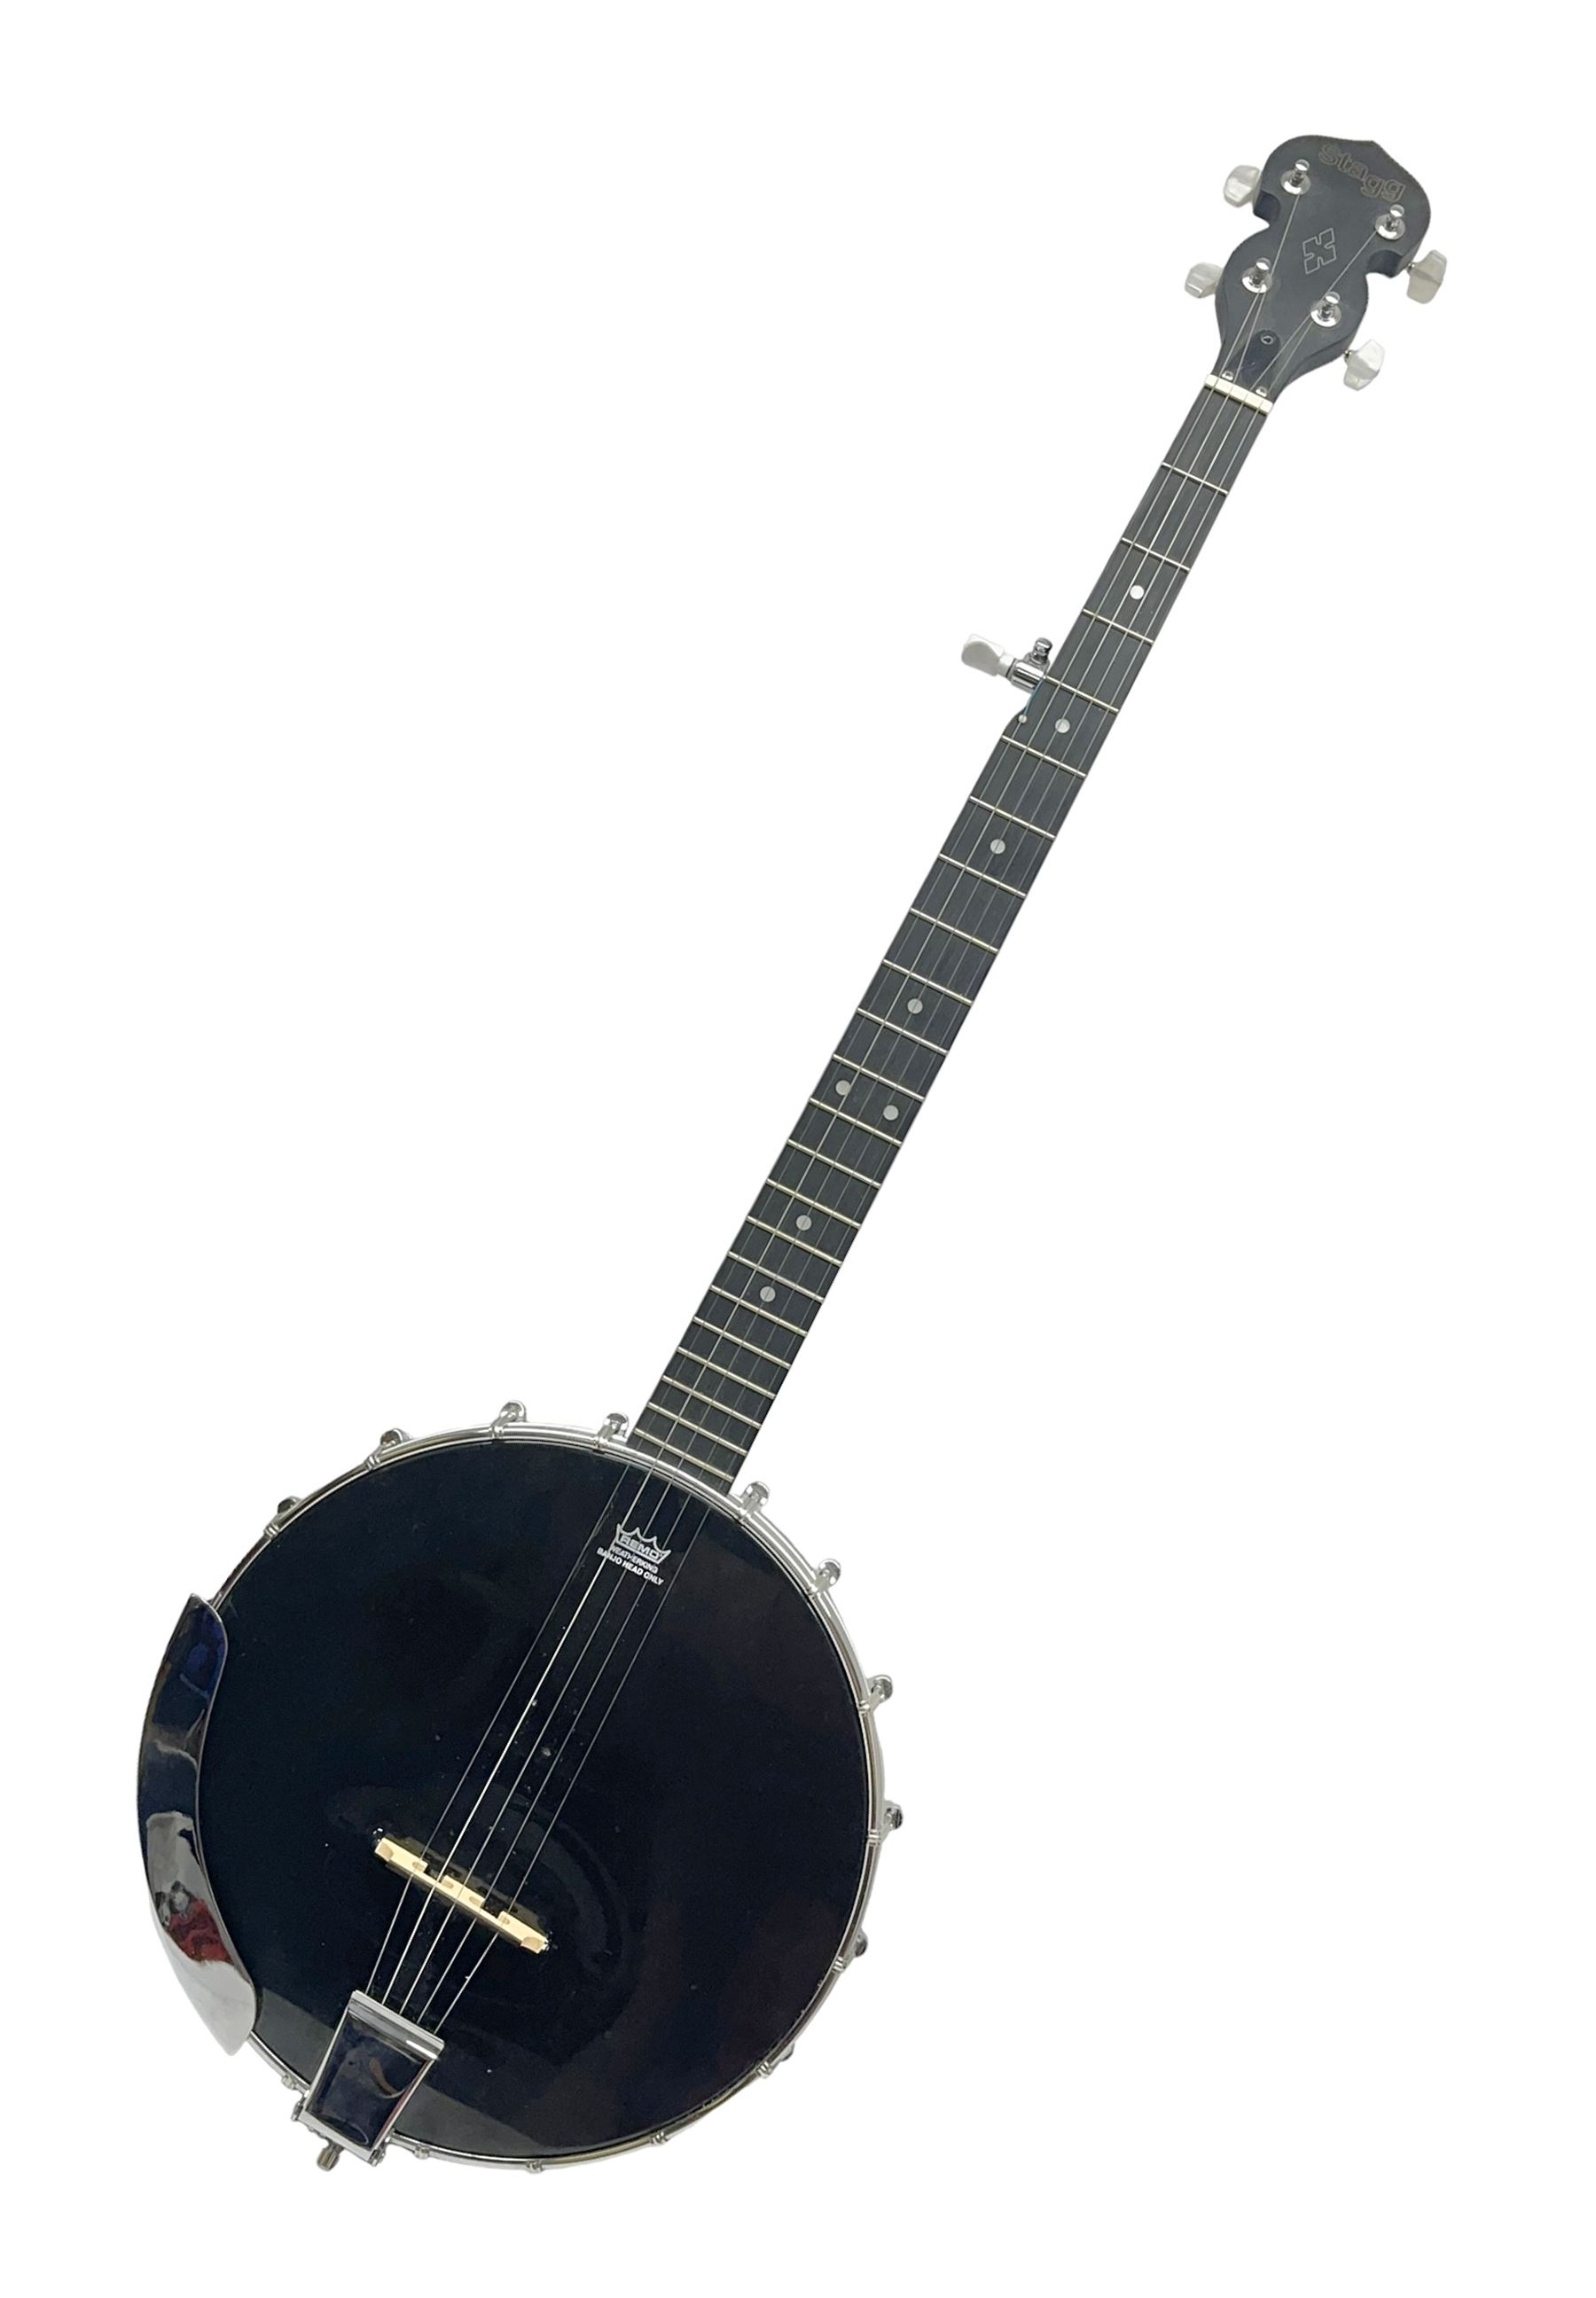 Stagg 5-string banjo L97.5cm; in soft carrying case